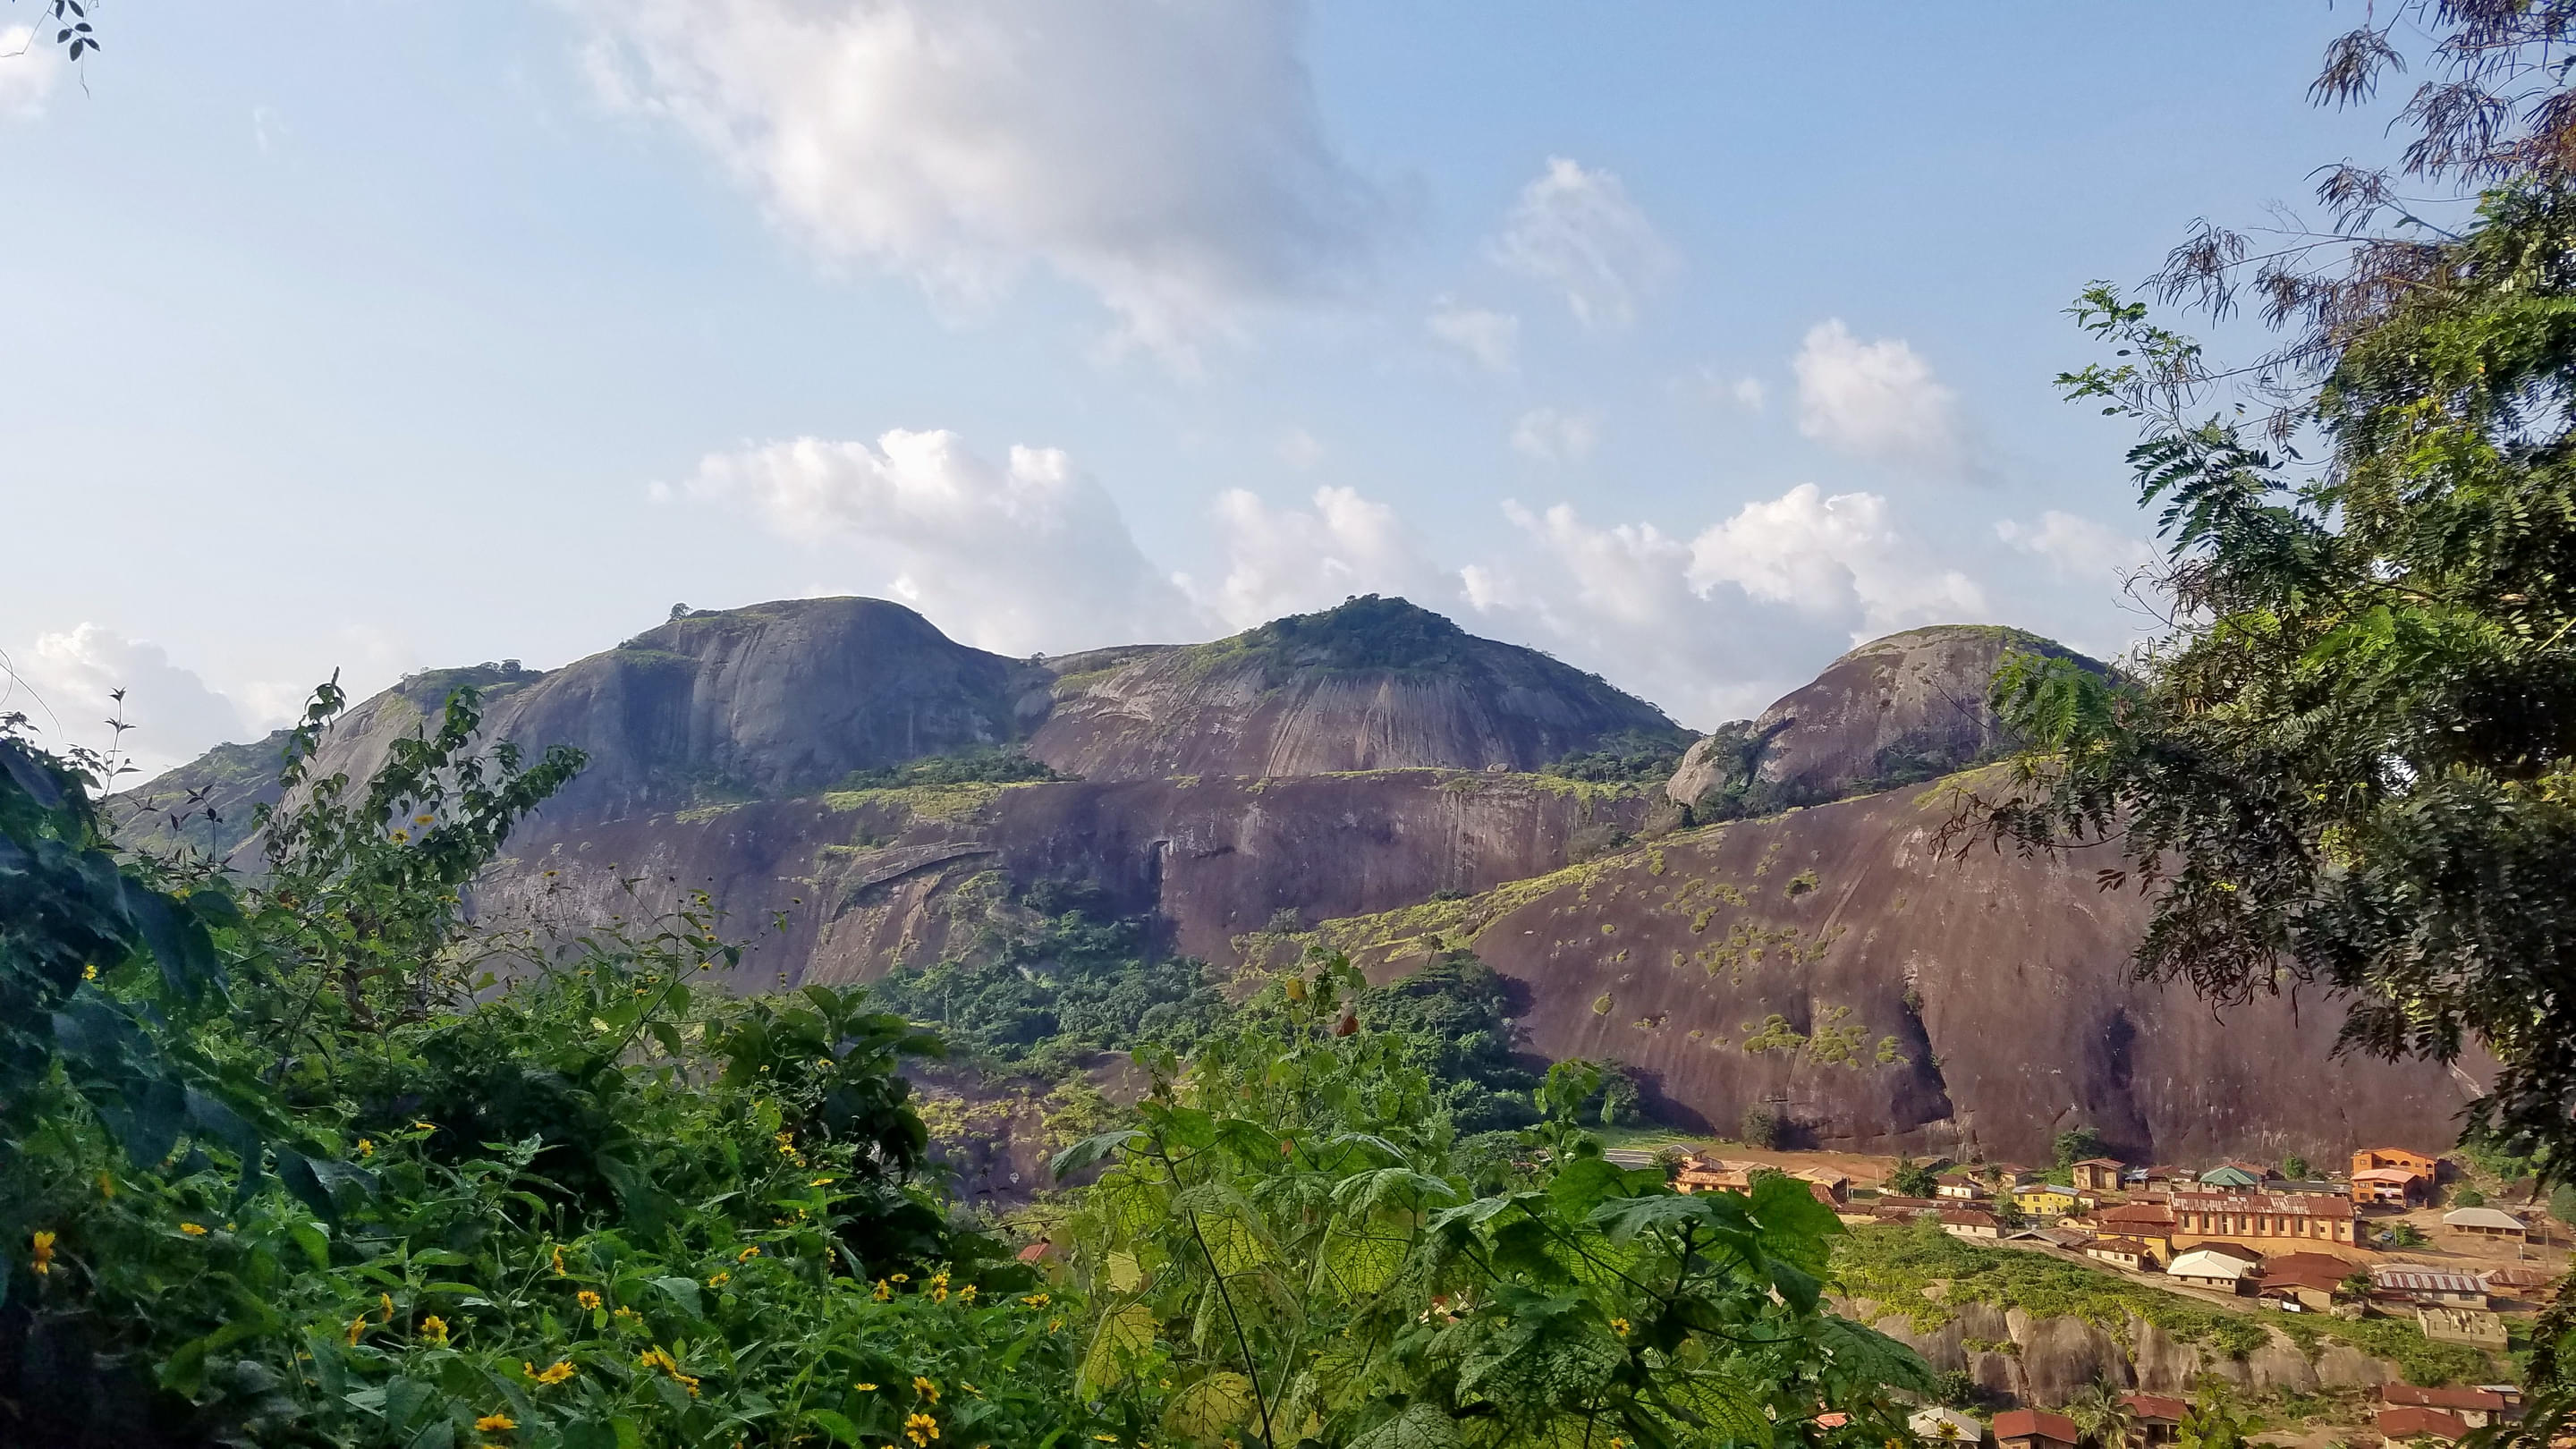 Idanre Hill Peak Overview